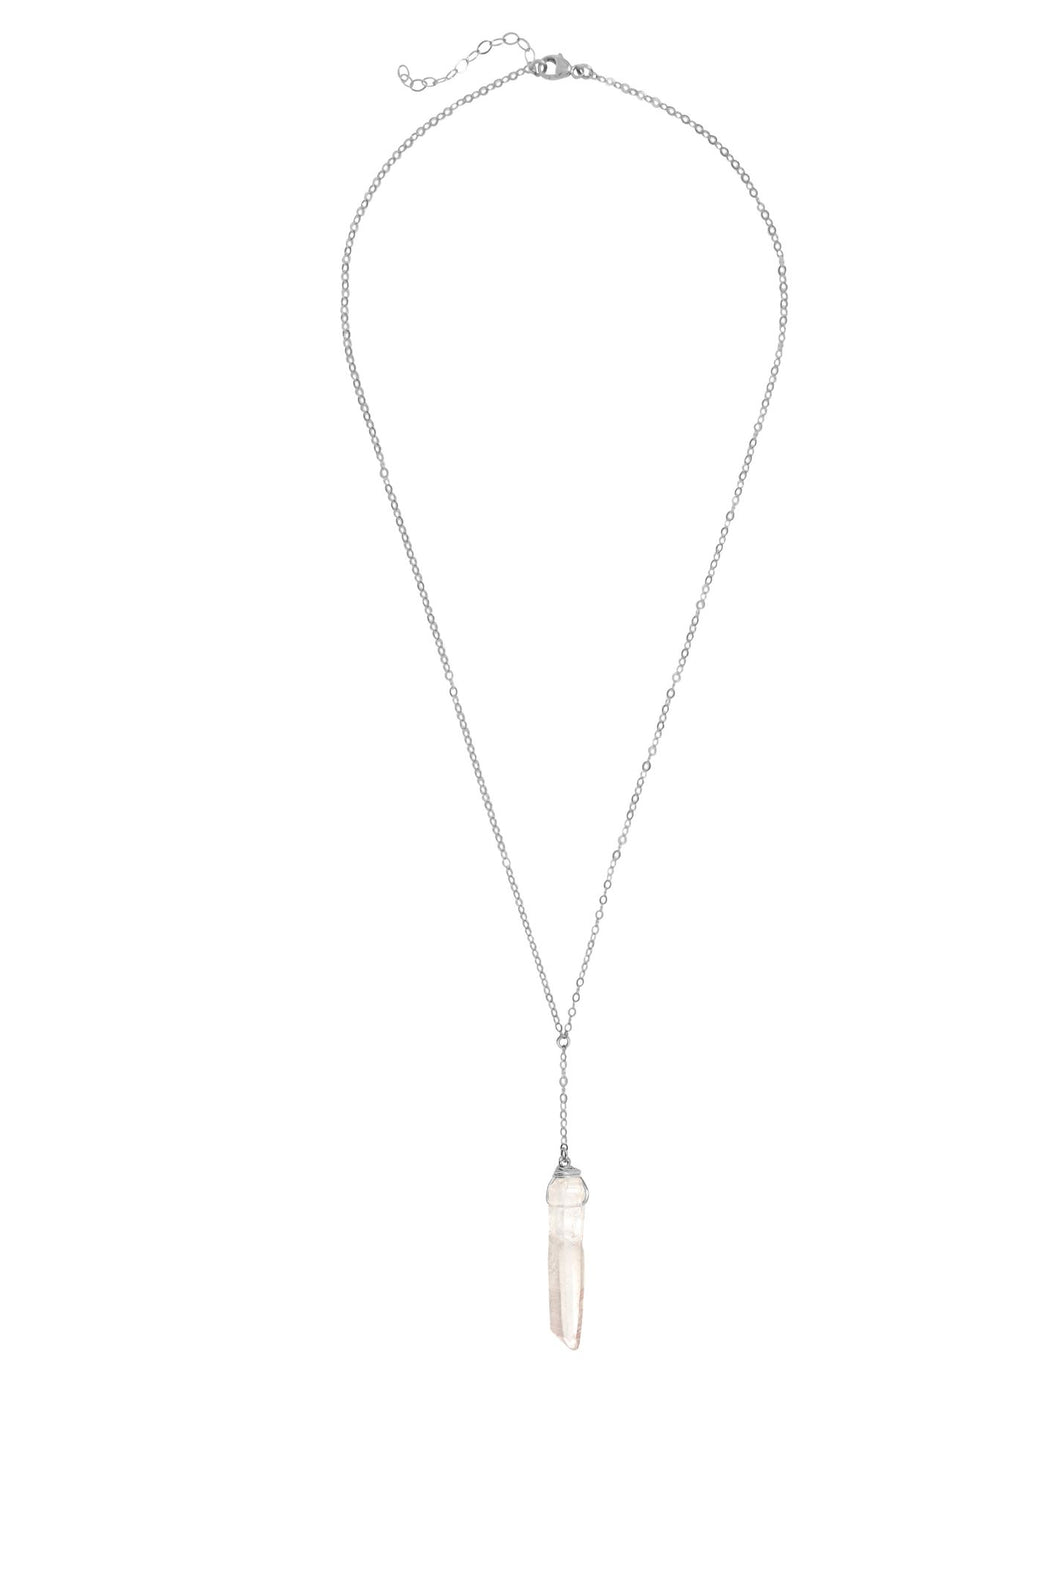 Fae Necklace - Pink Crystal Quartz